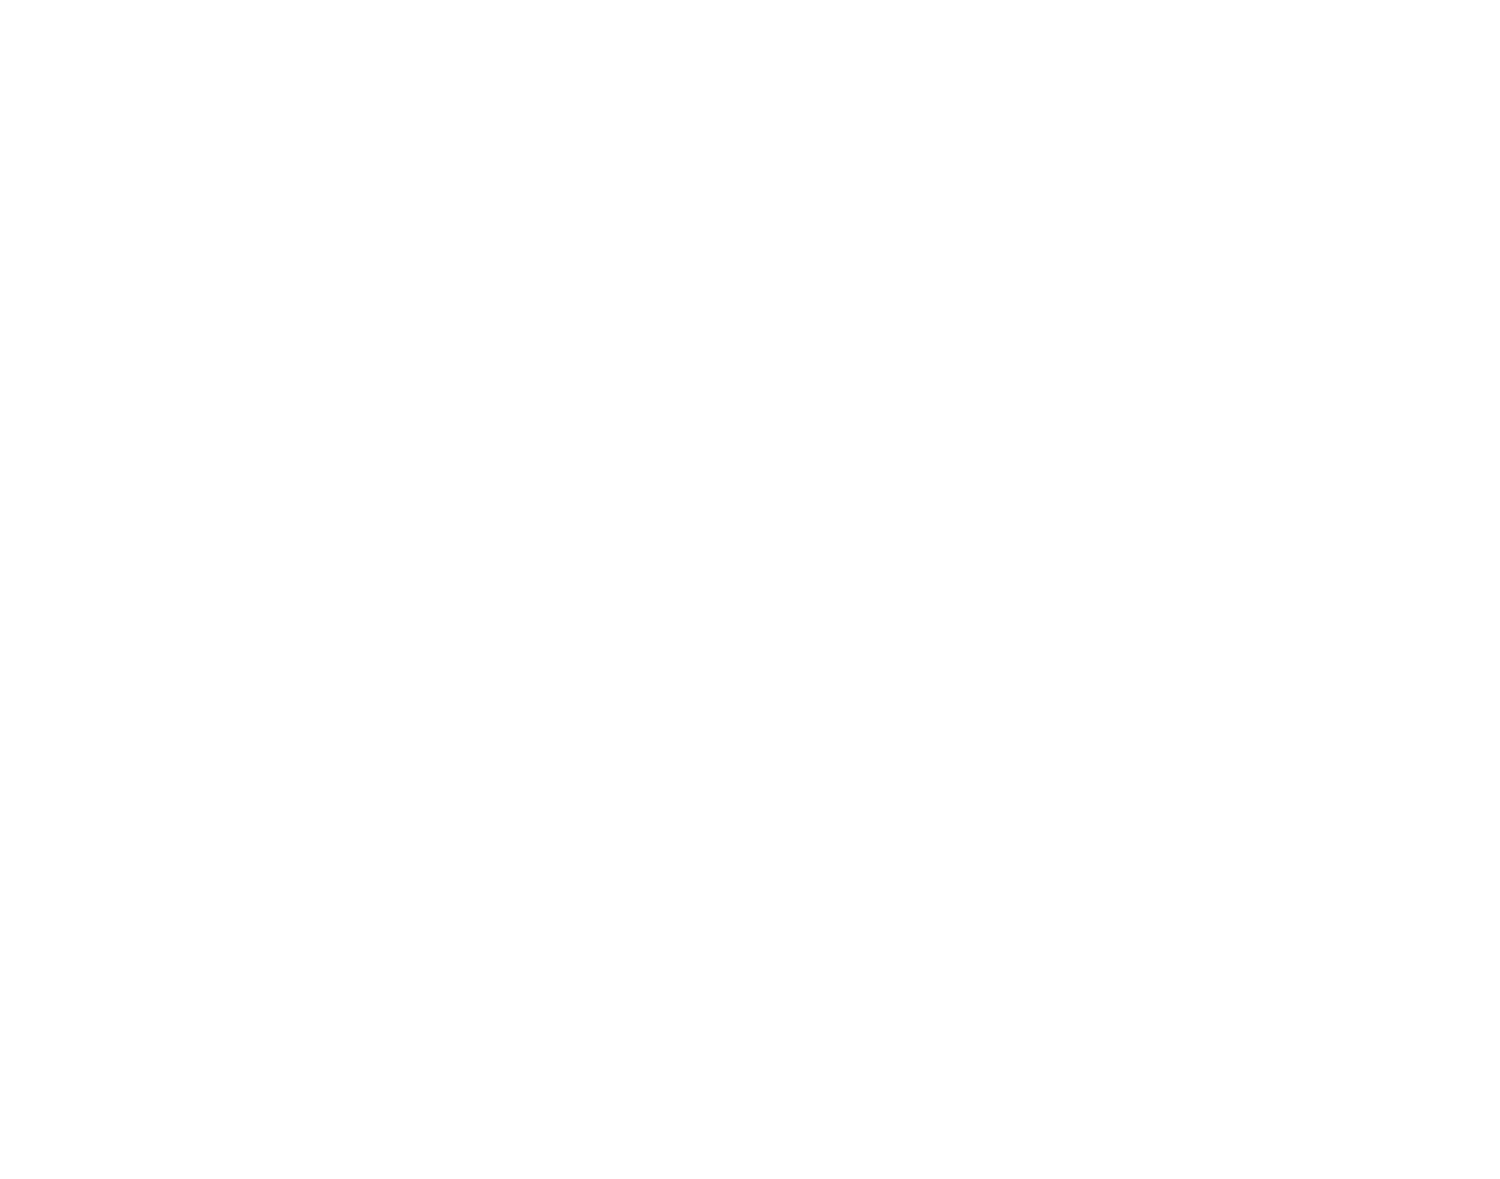 Julie Preston Psychology